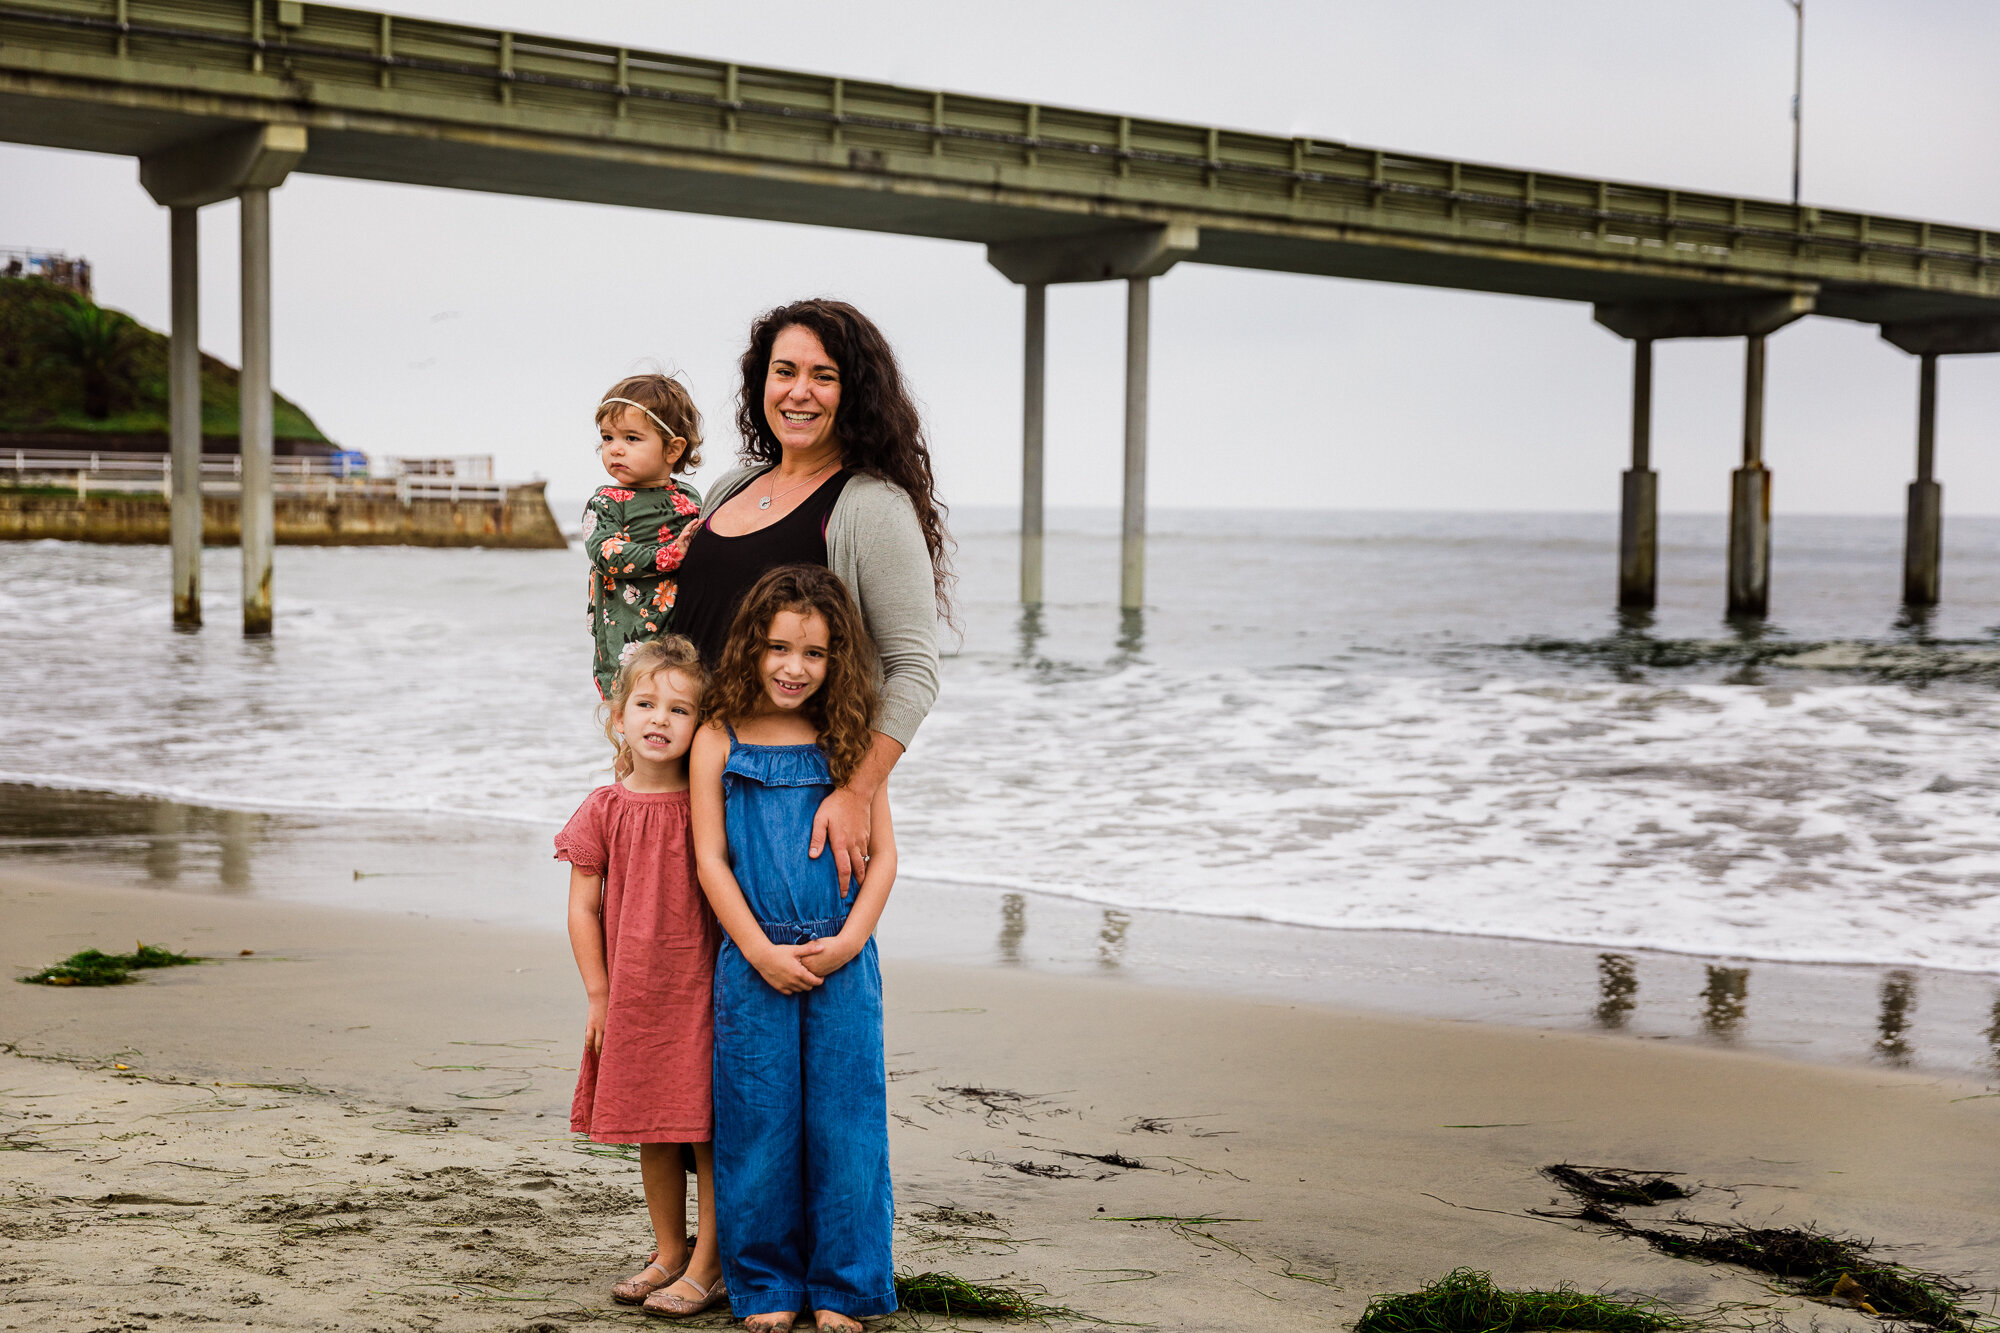 Family Portrait Photography Session at Ocean Beach Pier, San Diego, California-59.jpg